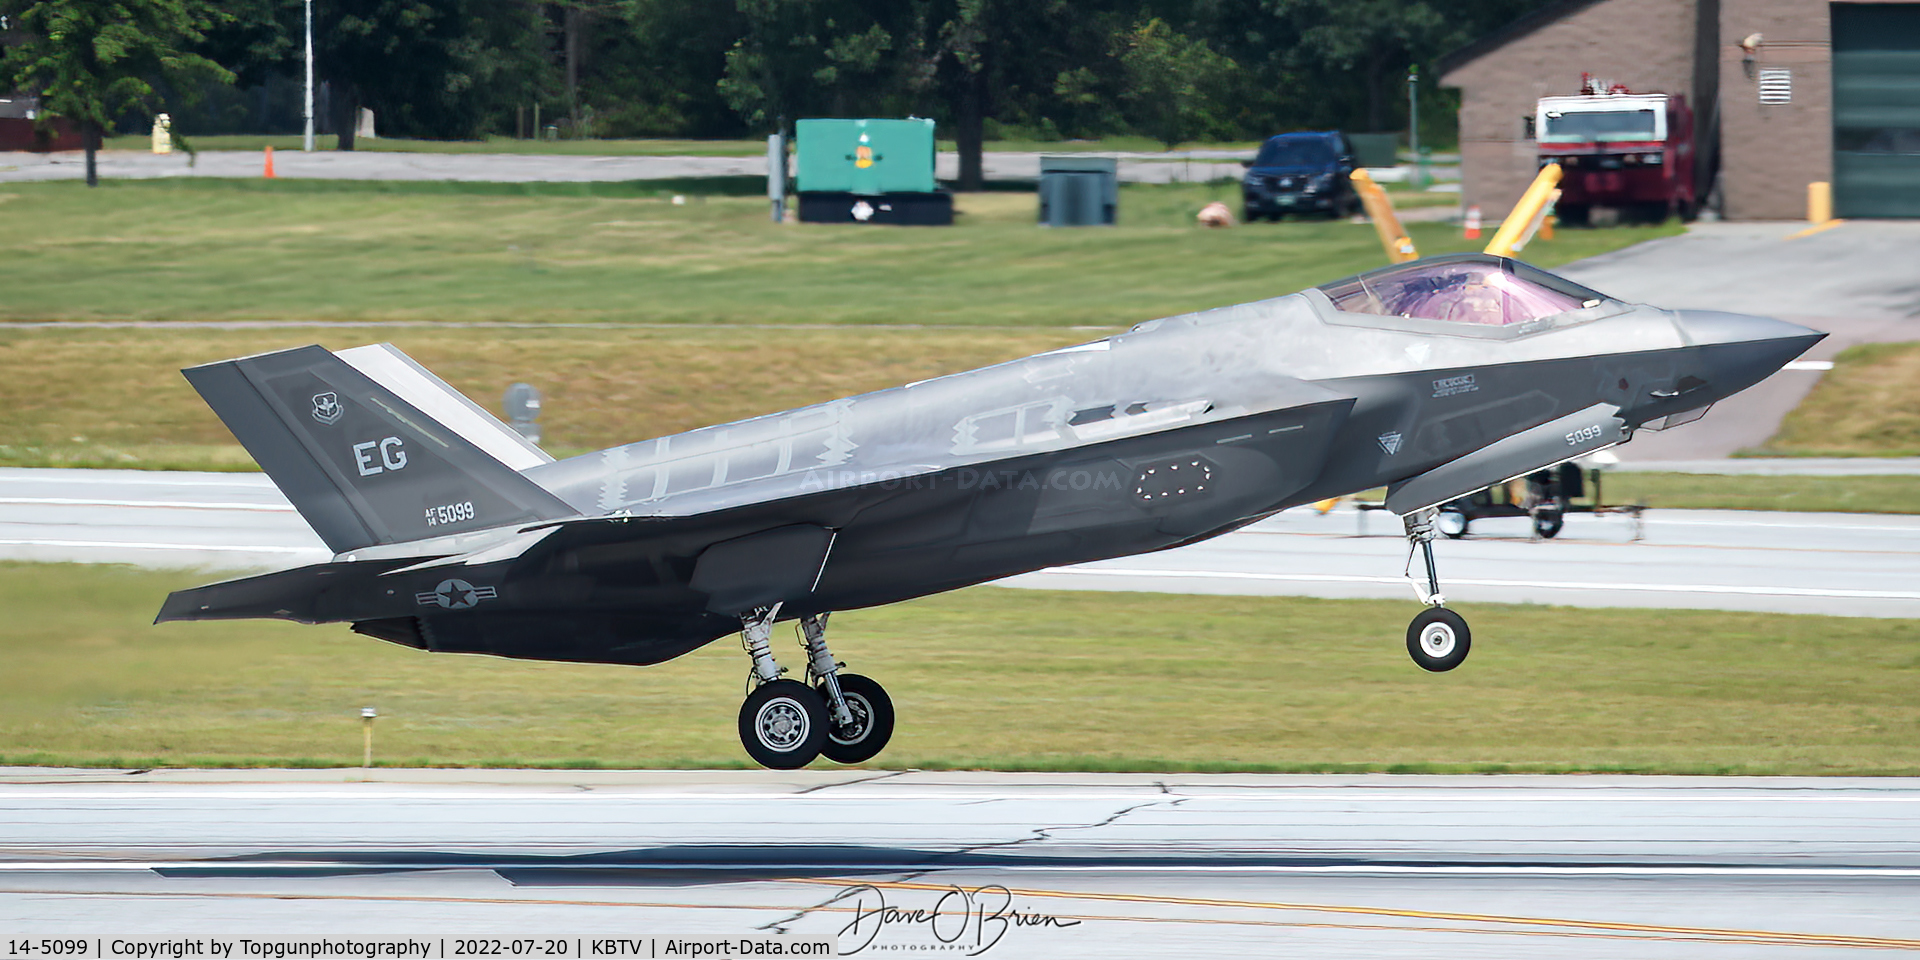 14-5099, 2016 Lockheed Martin F-35A Lightning II C/N AF-100, HUSKY02 sets out after his wingman